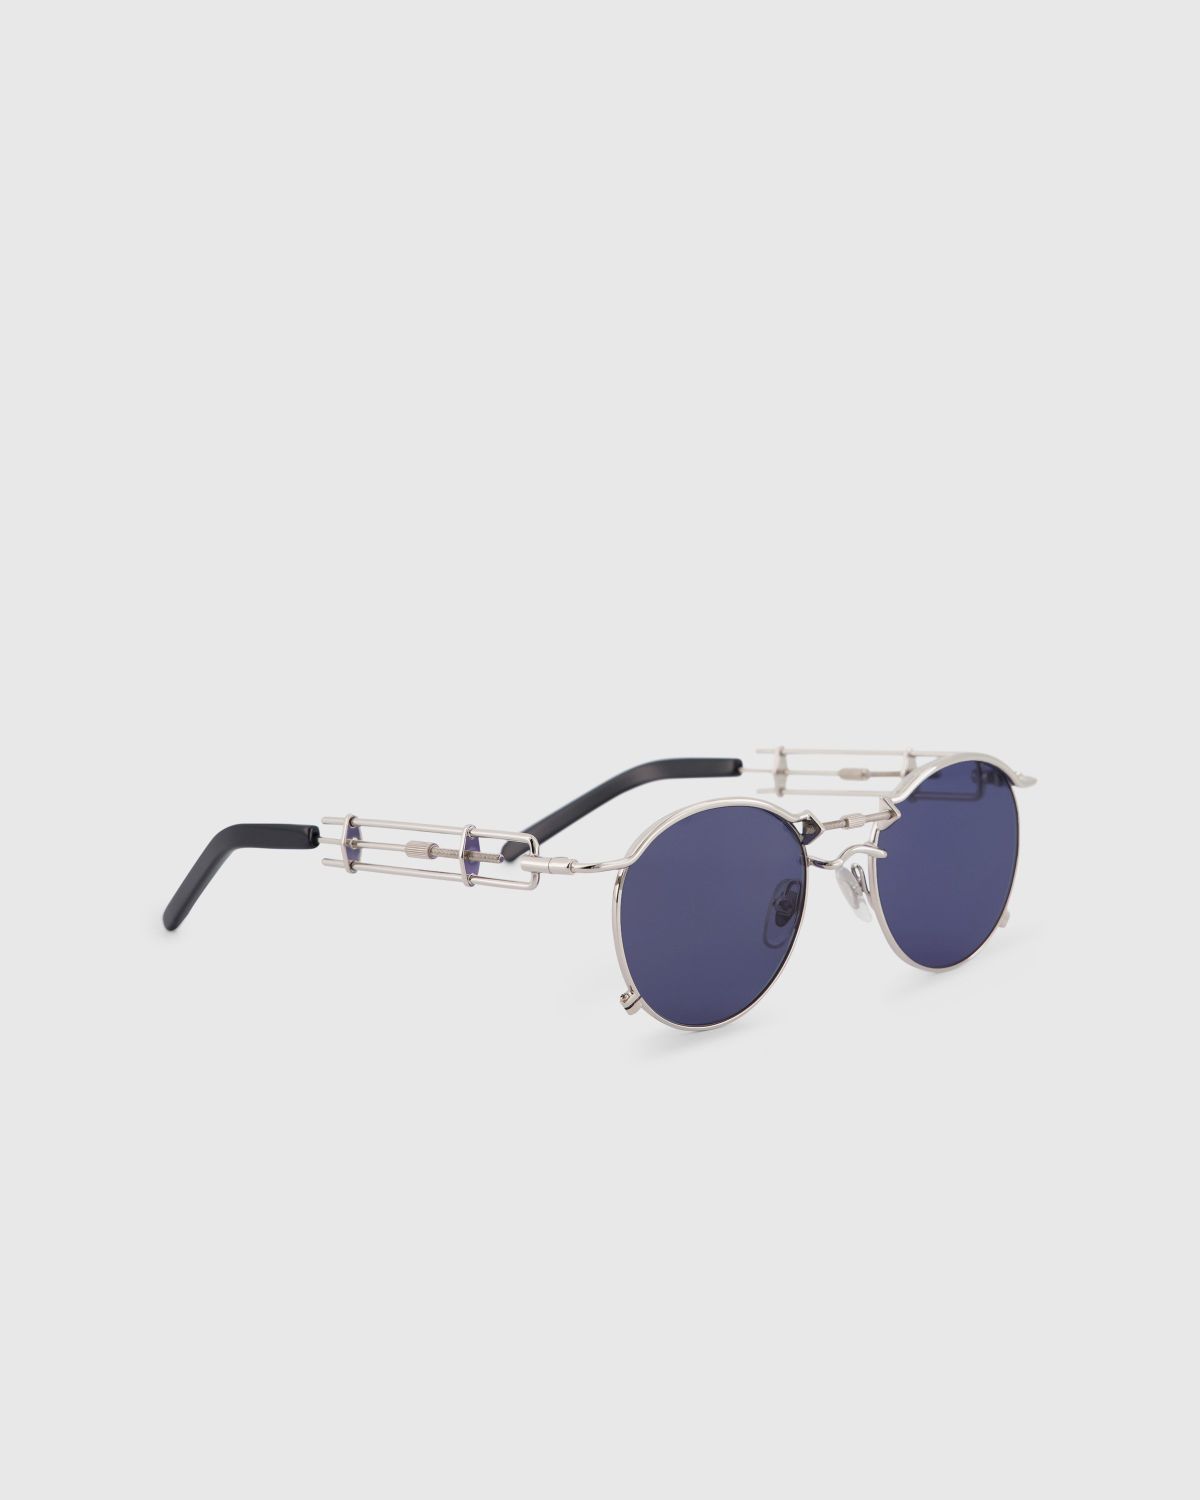 Jean Paul Gaultier x Burna Boy – 56-0174 Pas De Vis Sunglasses Silver - Sunglasses - Silver - Image 2